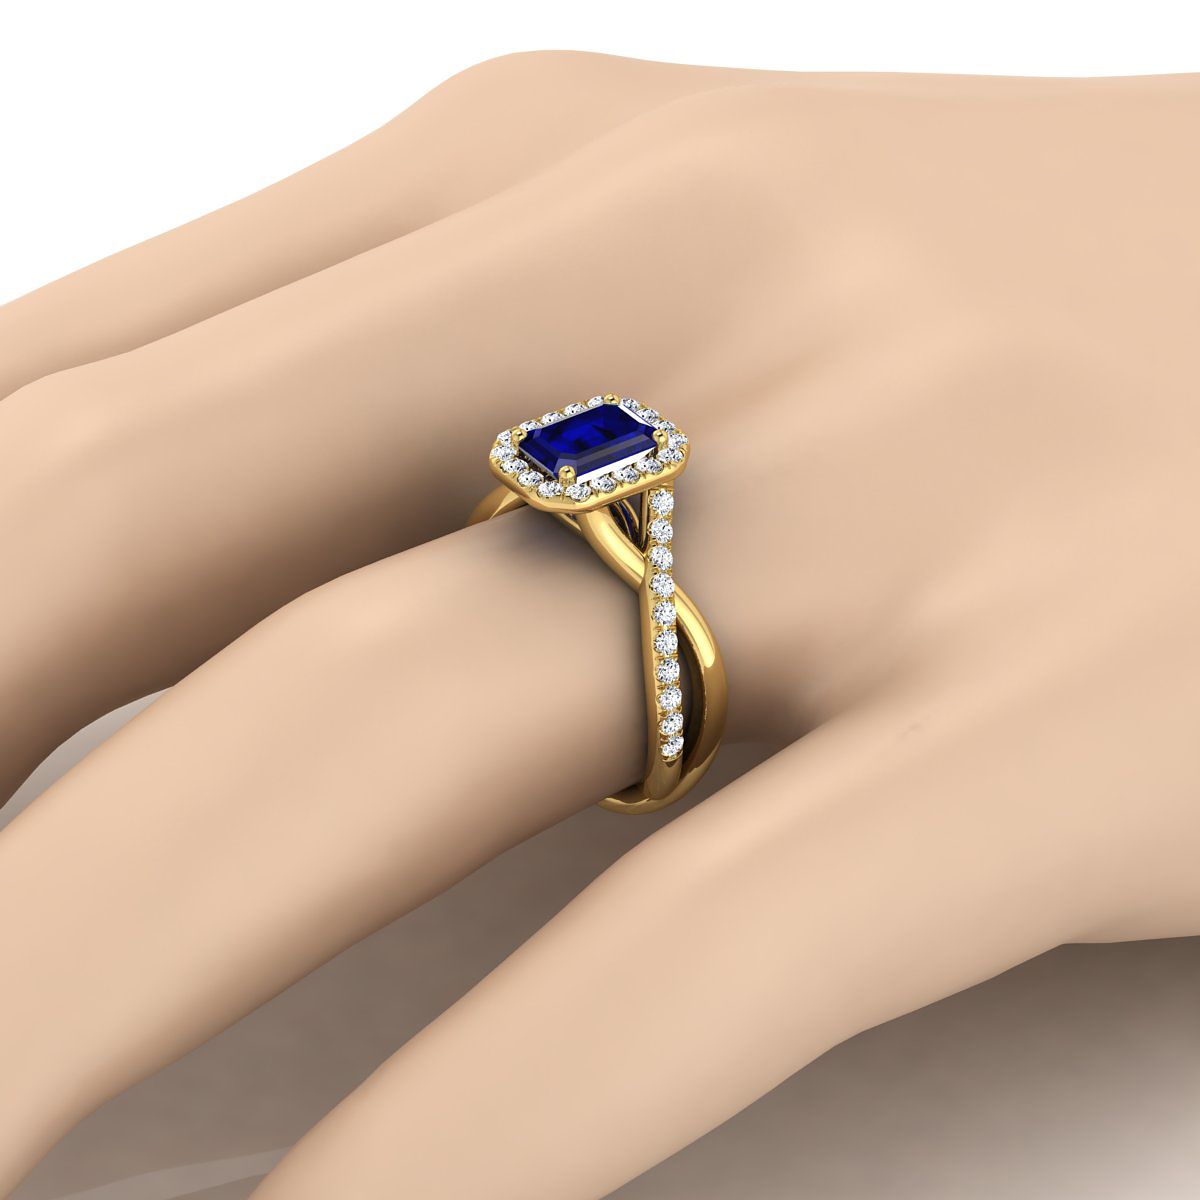 14K Yellow Gold Emerald Cut Sapphire Twisted Vine Diamond Halo Engagement Ring -1/2ctw